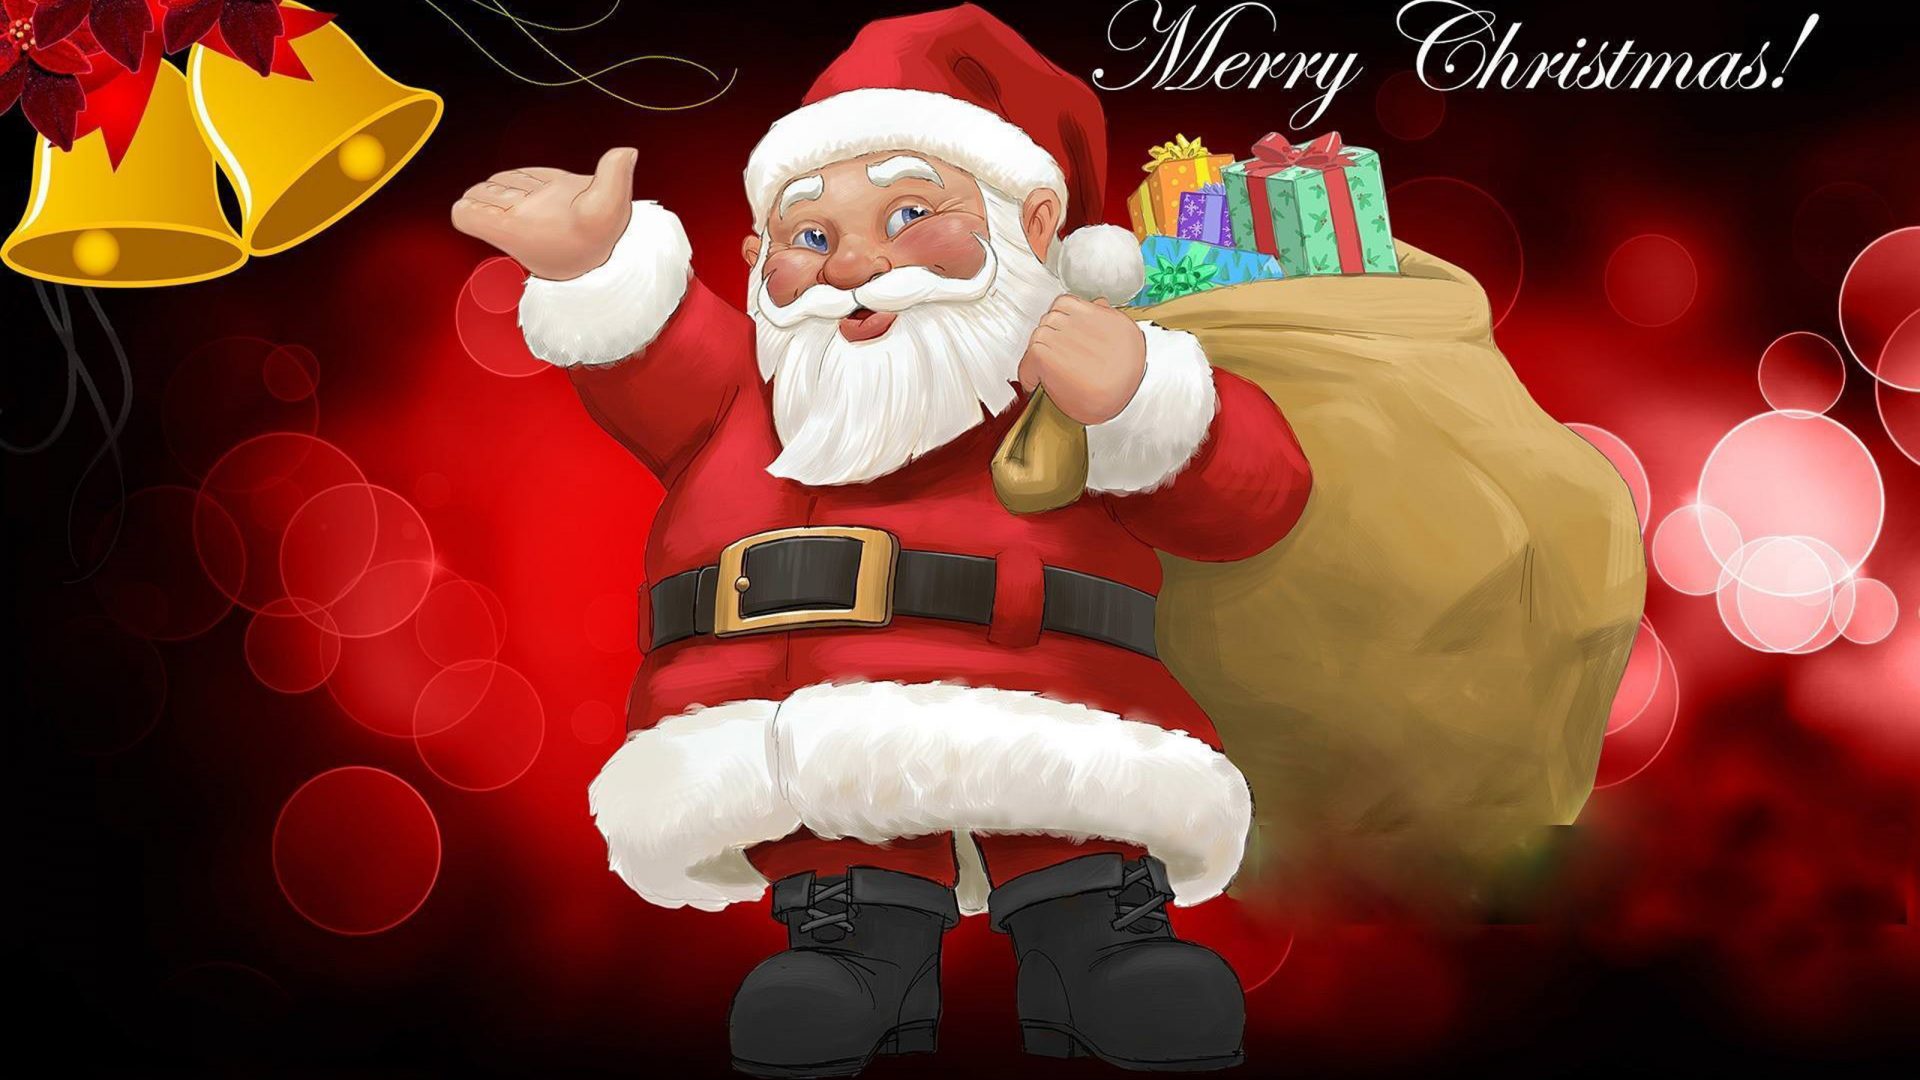 Santa Claus Christmas Specials